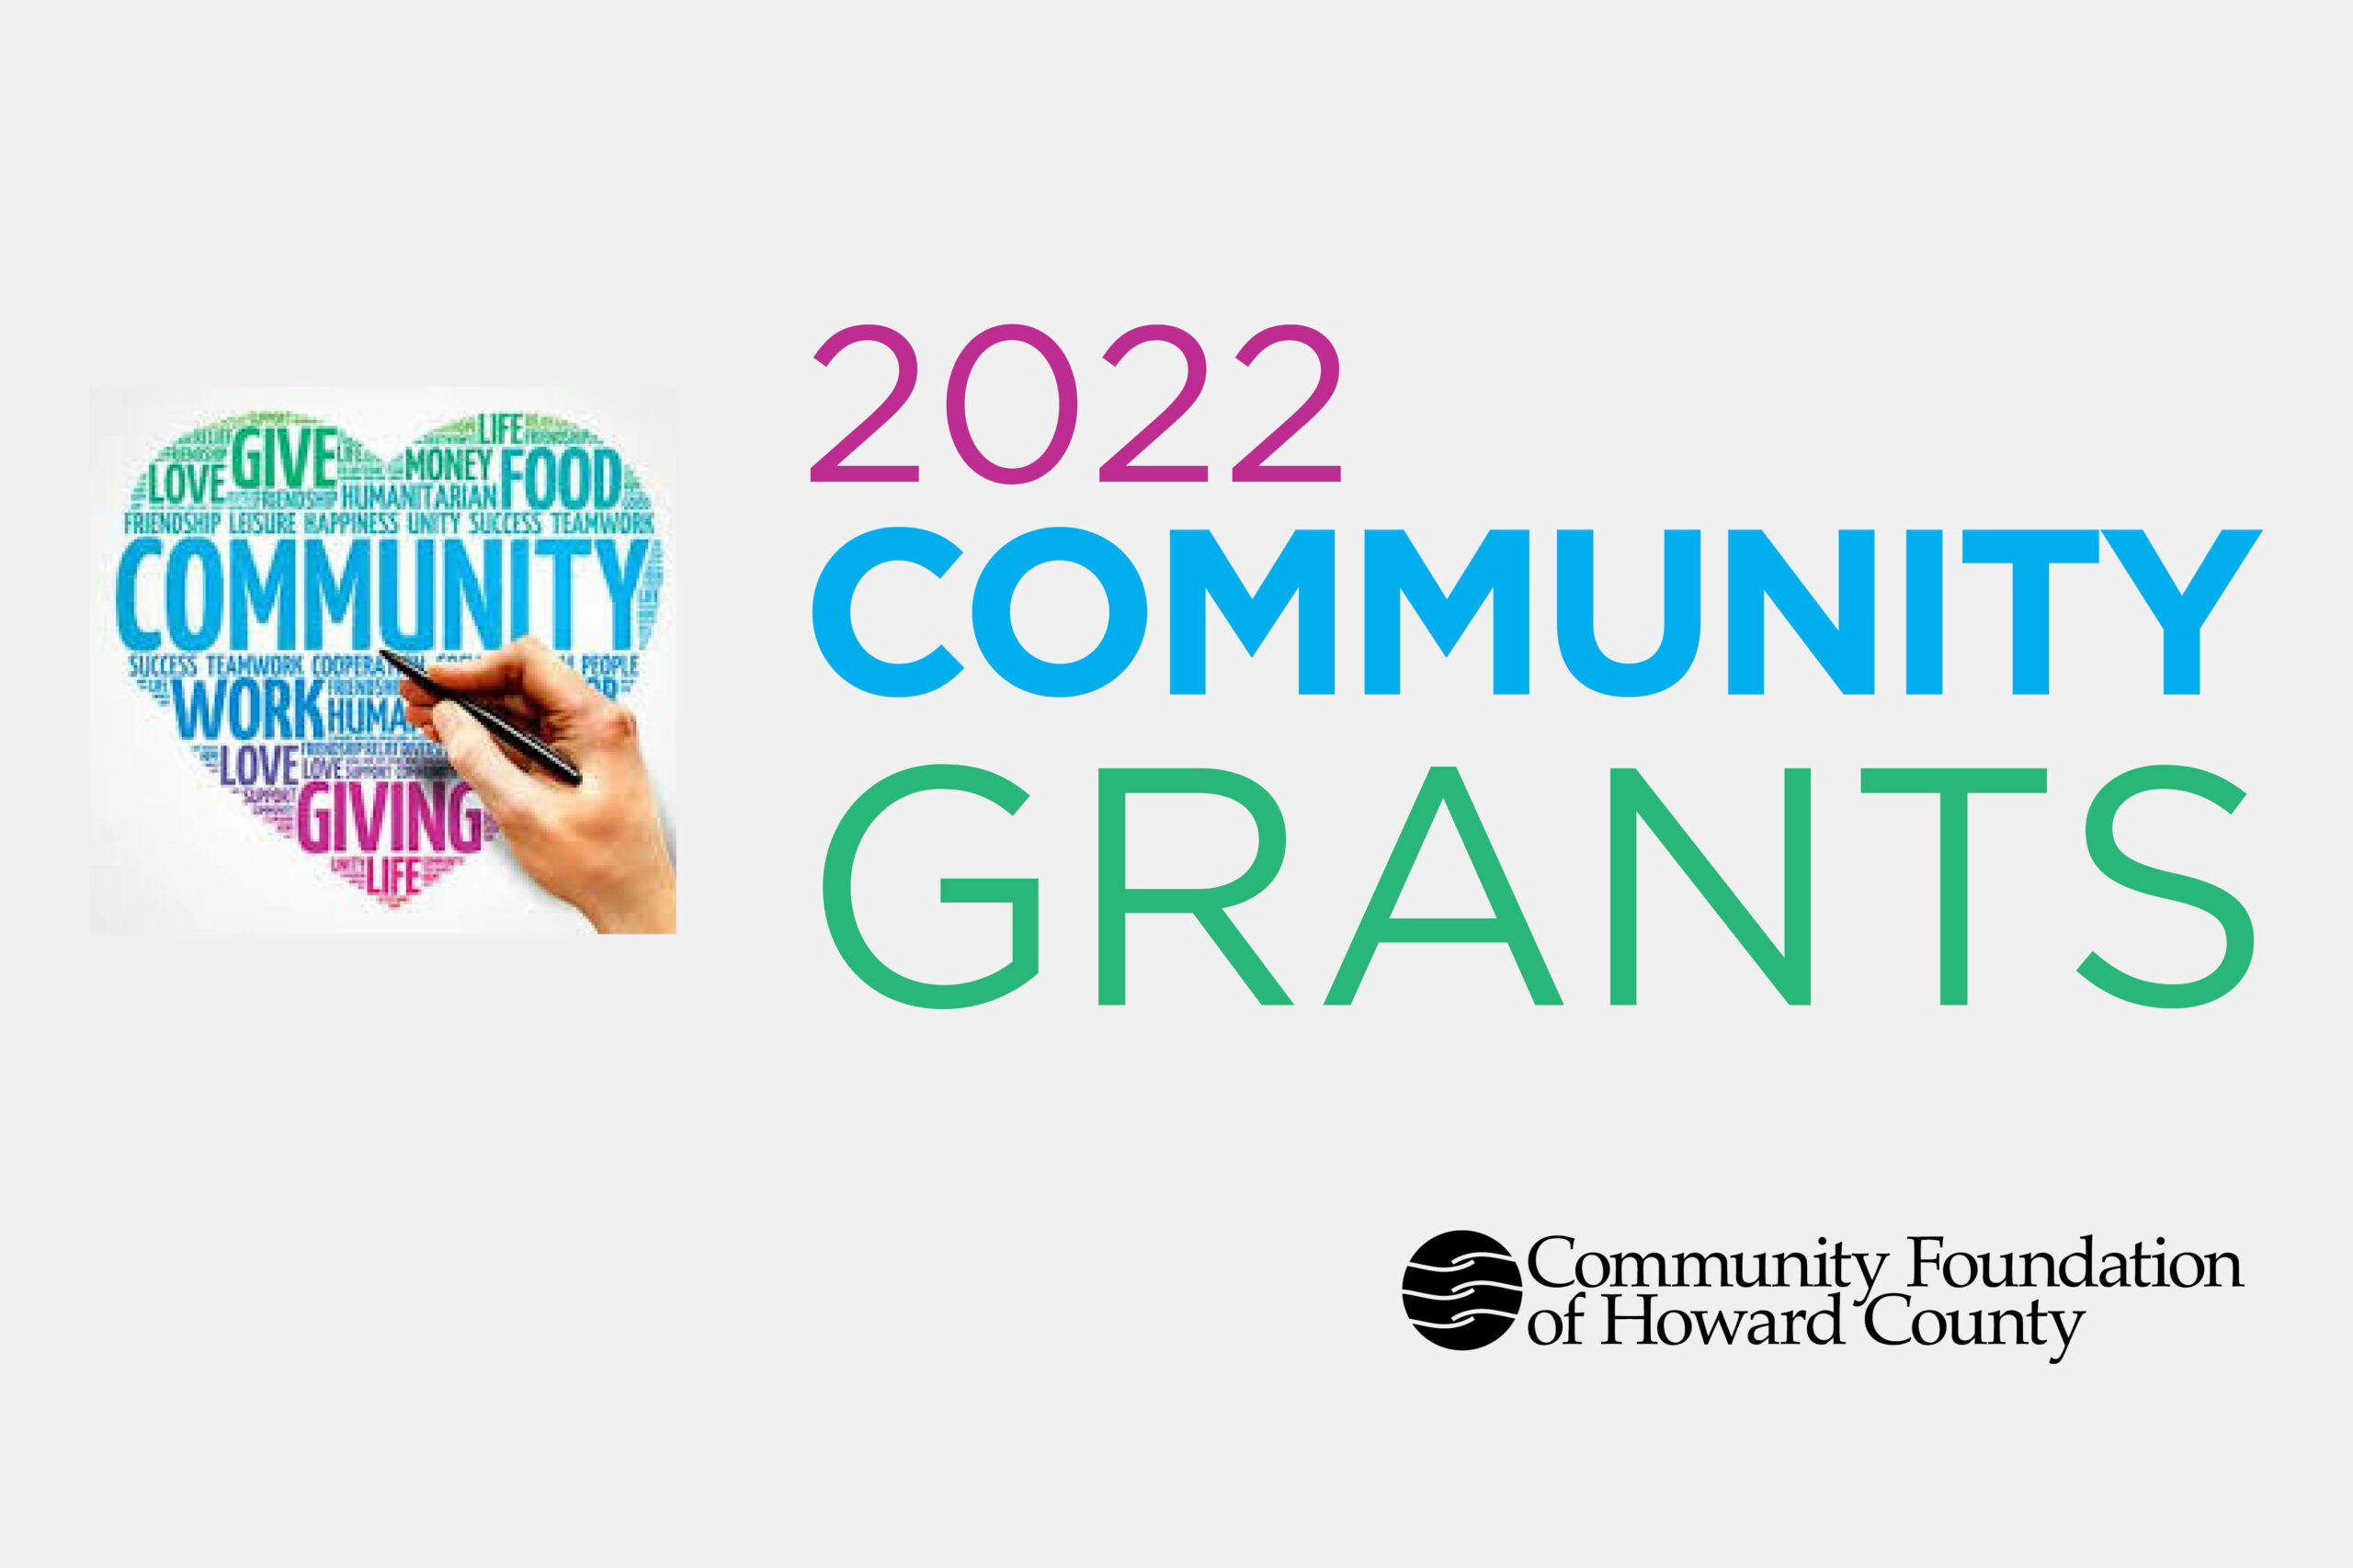 CFHoCo Announces 2022 Community Grant Awards